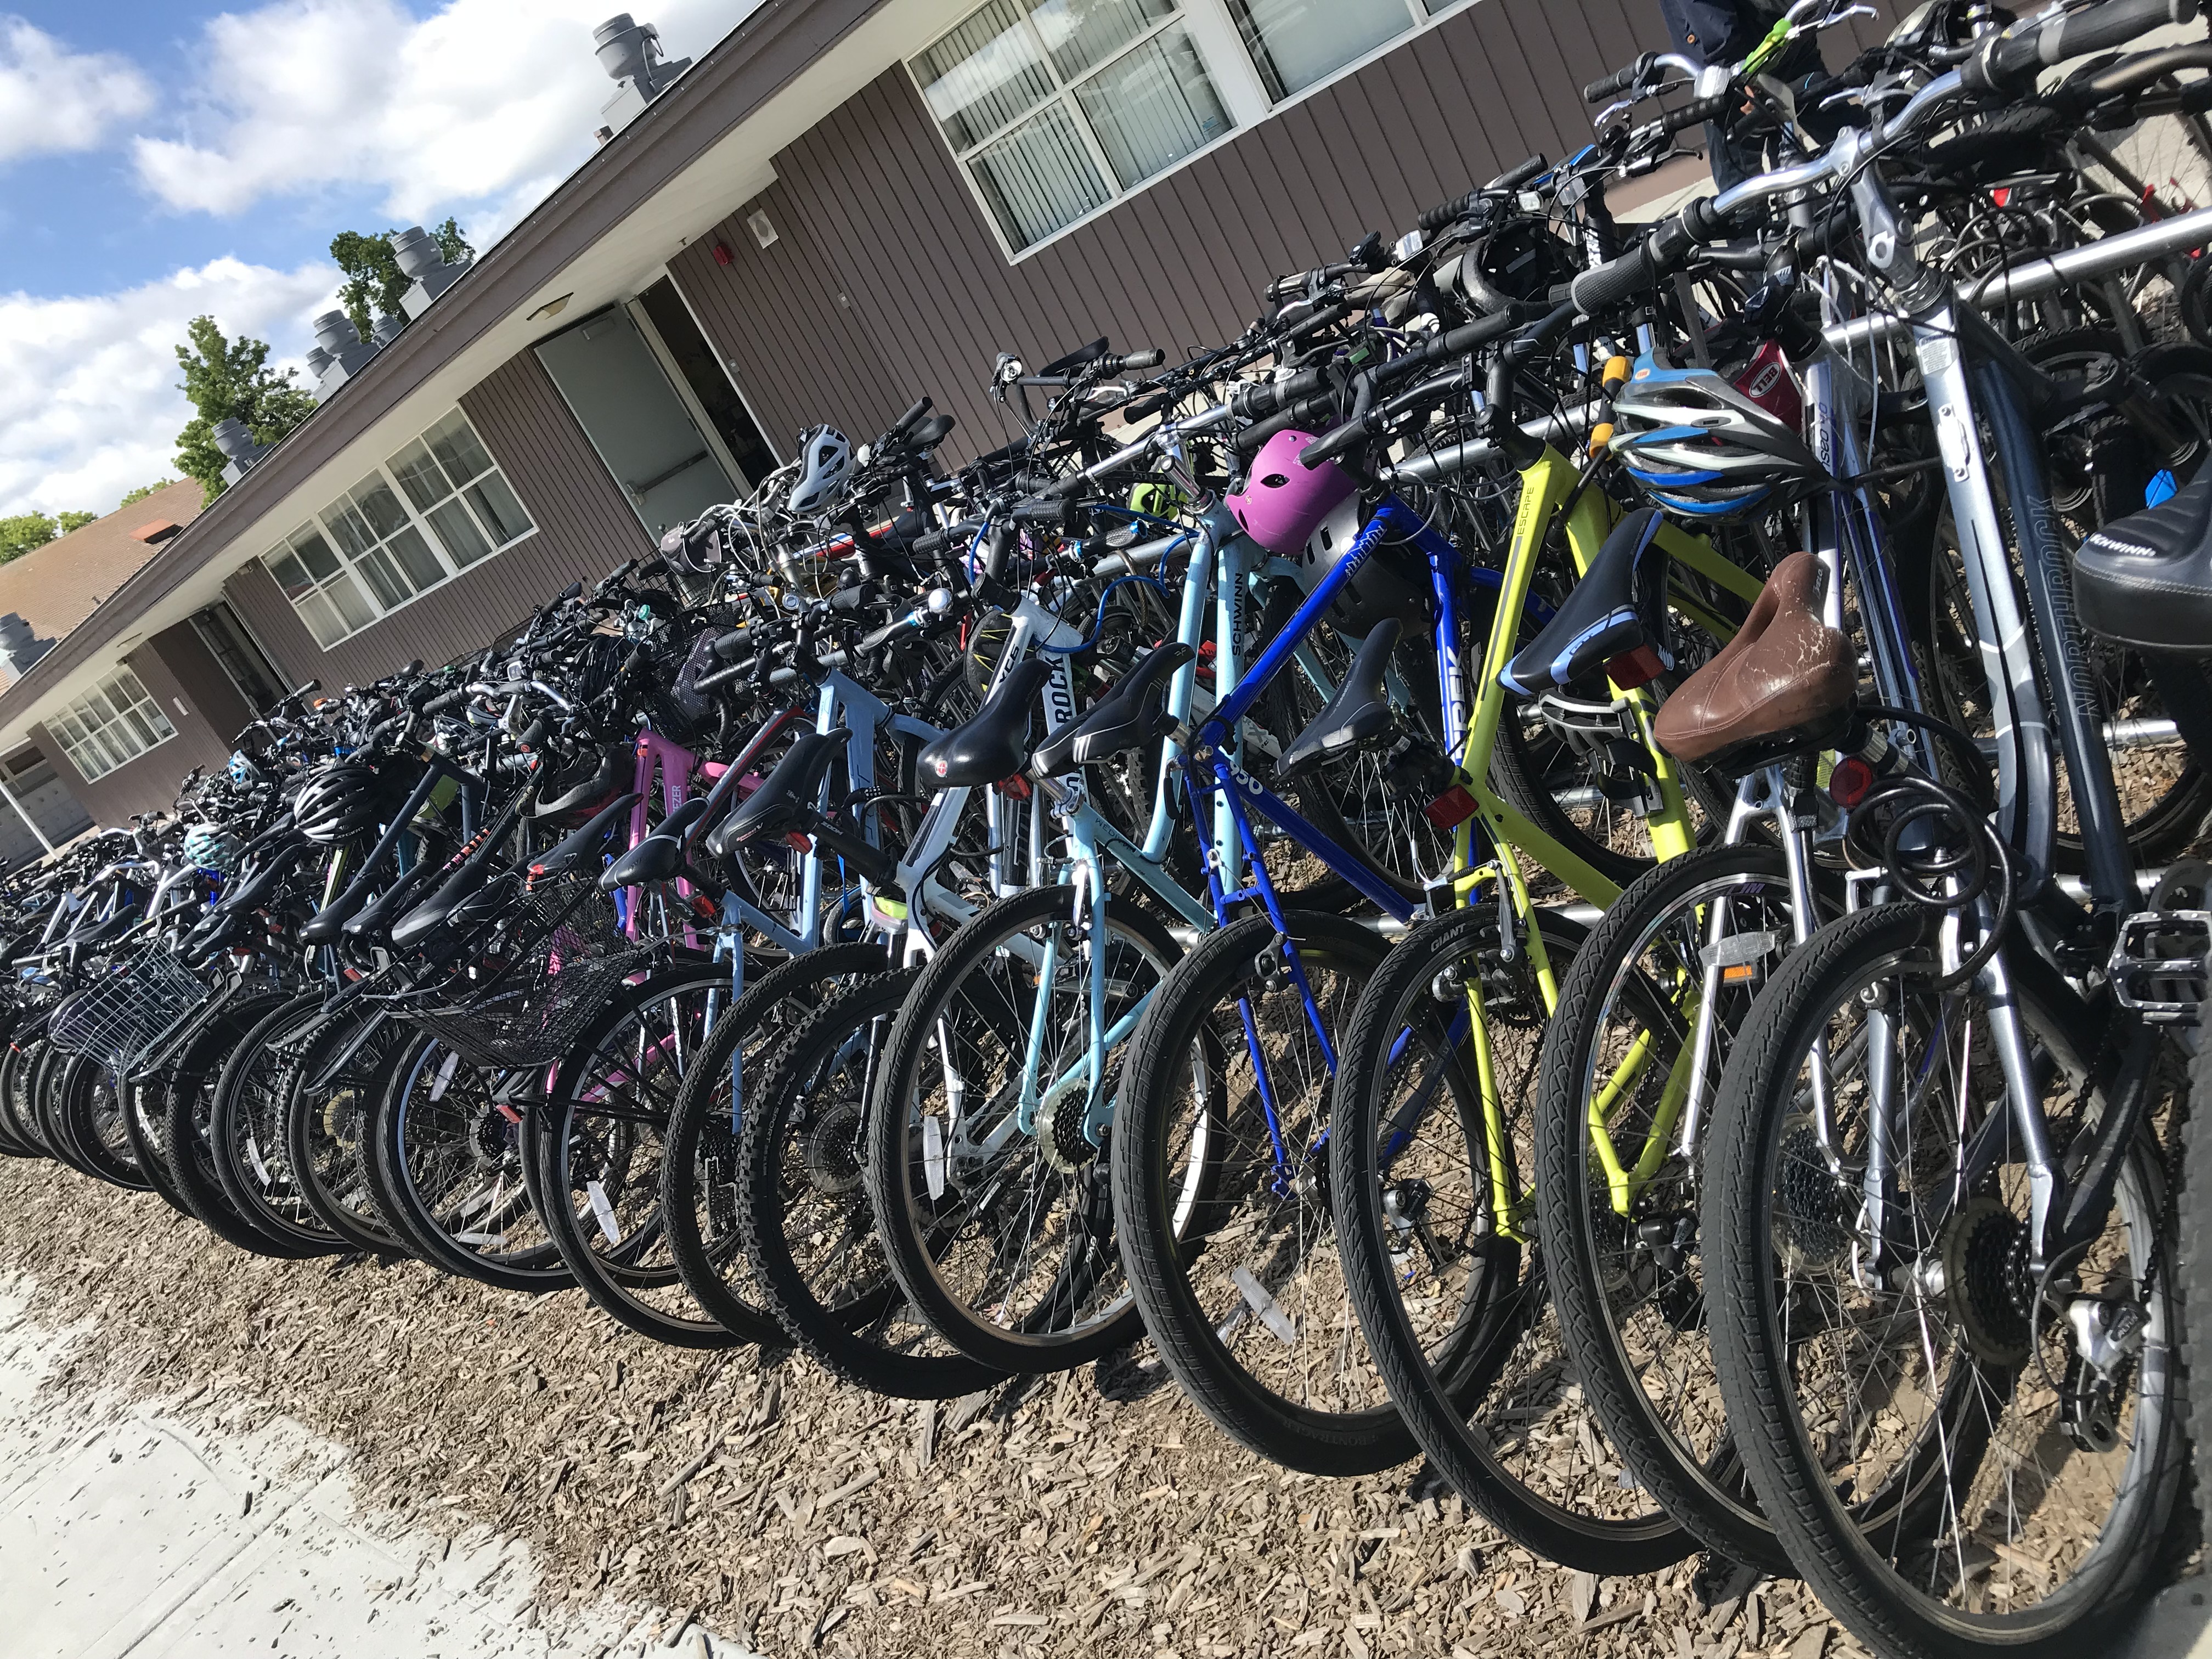 A row of bikes on a bike rack